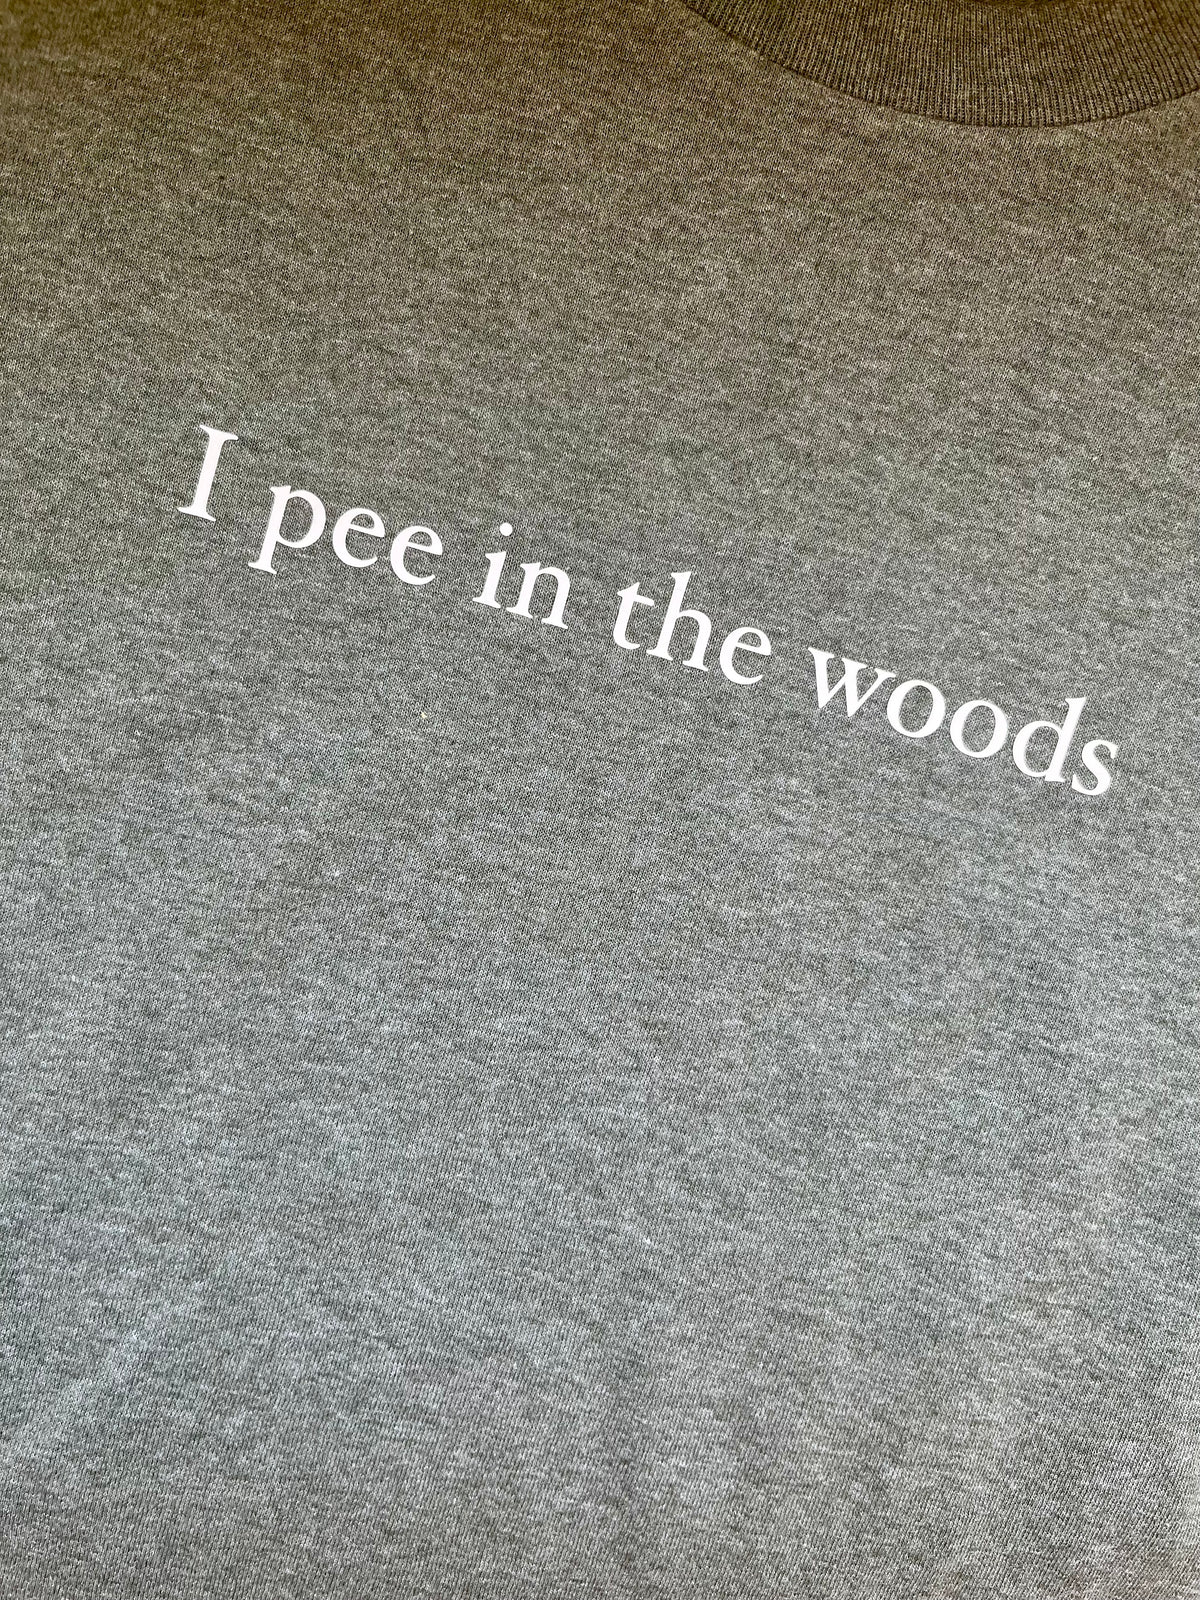 I Pee in the Woods Tee